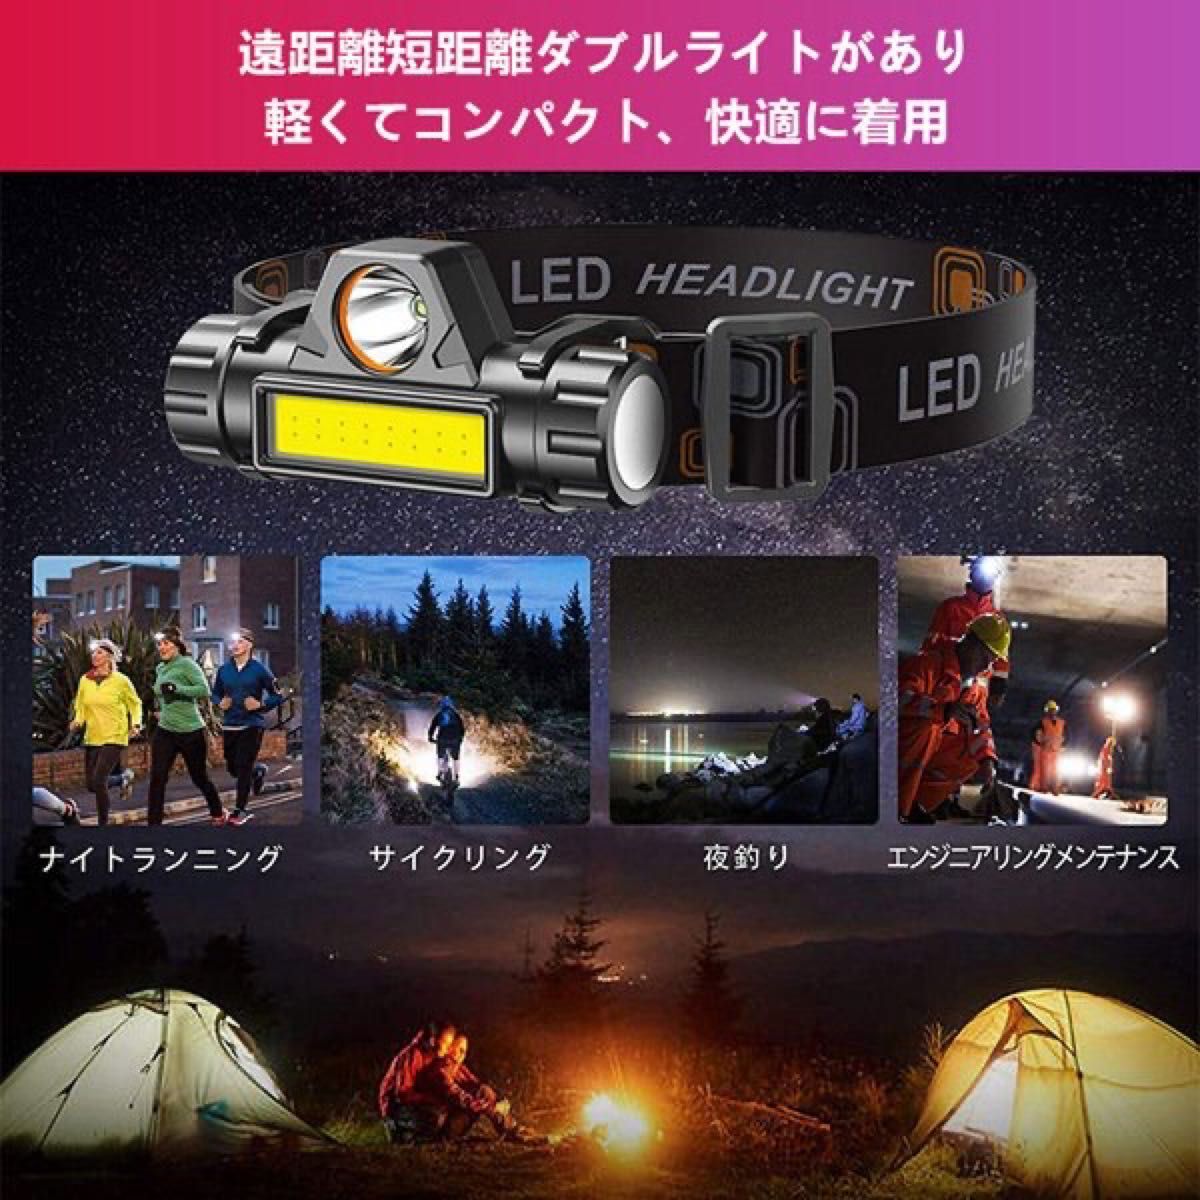 LED ヘッドライト 2台セット キャンプ 夜釣り アウトドア 夜間作業 高輝度 USB充電 防水 防災 夜間作業灯